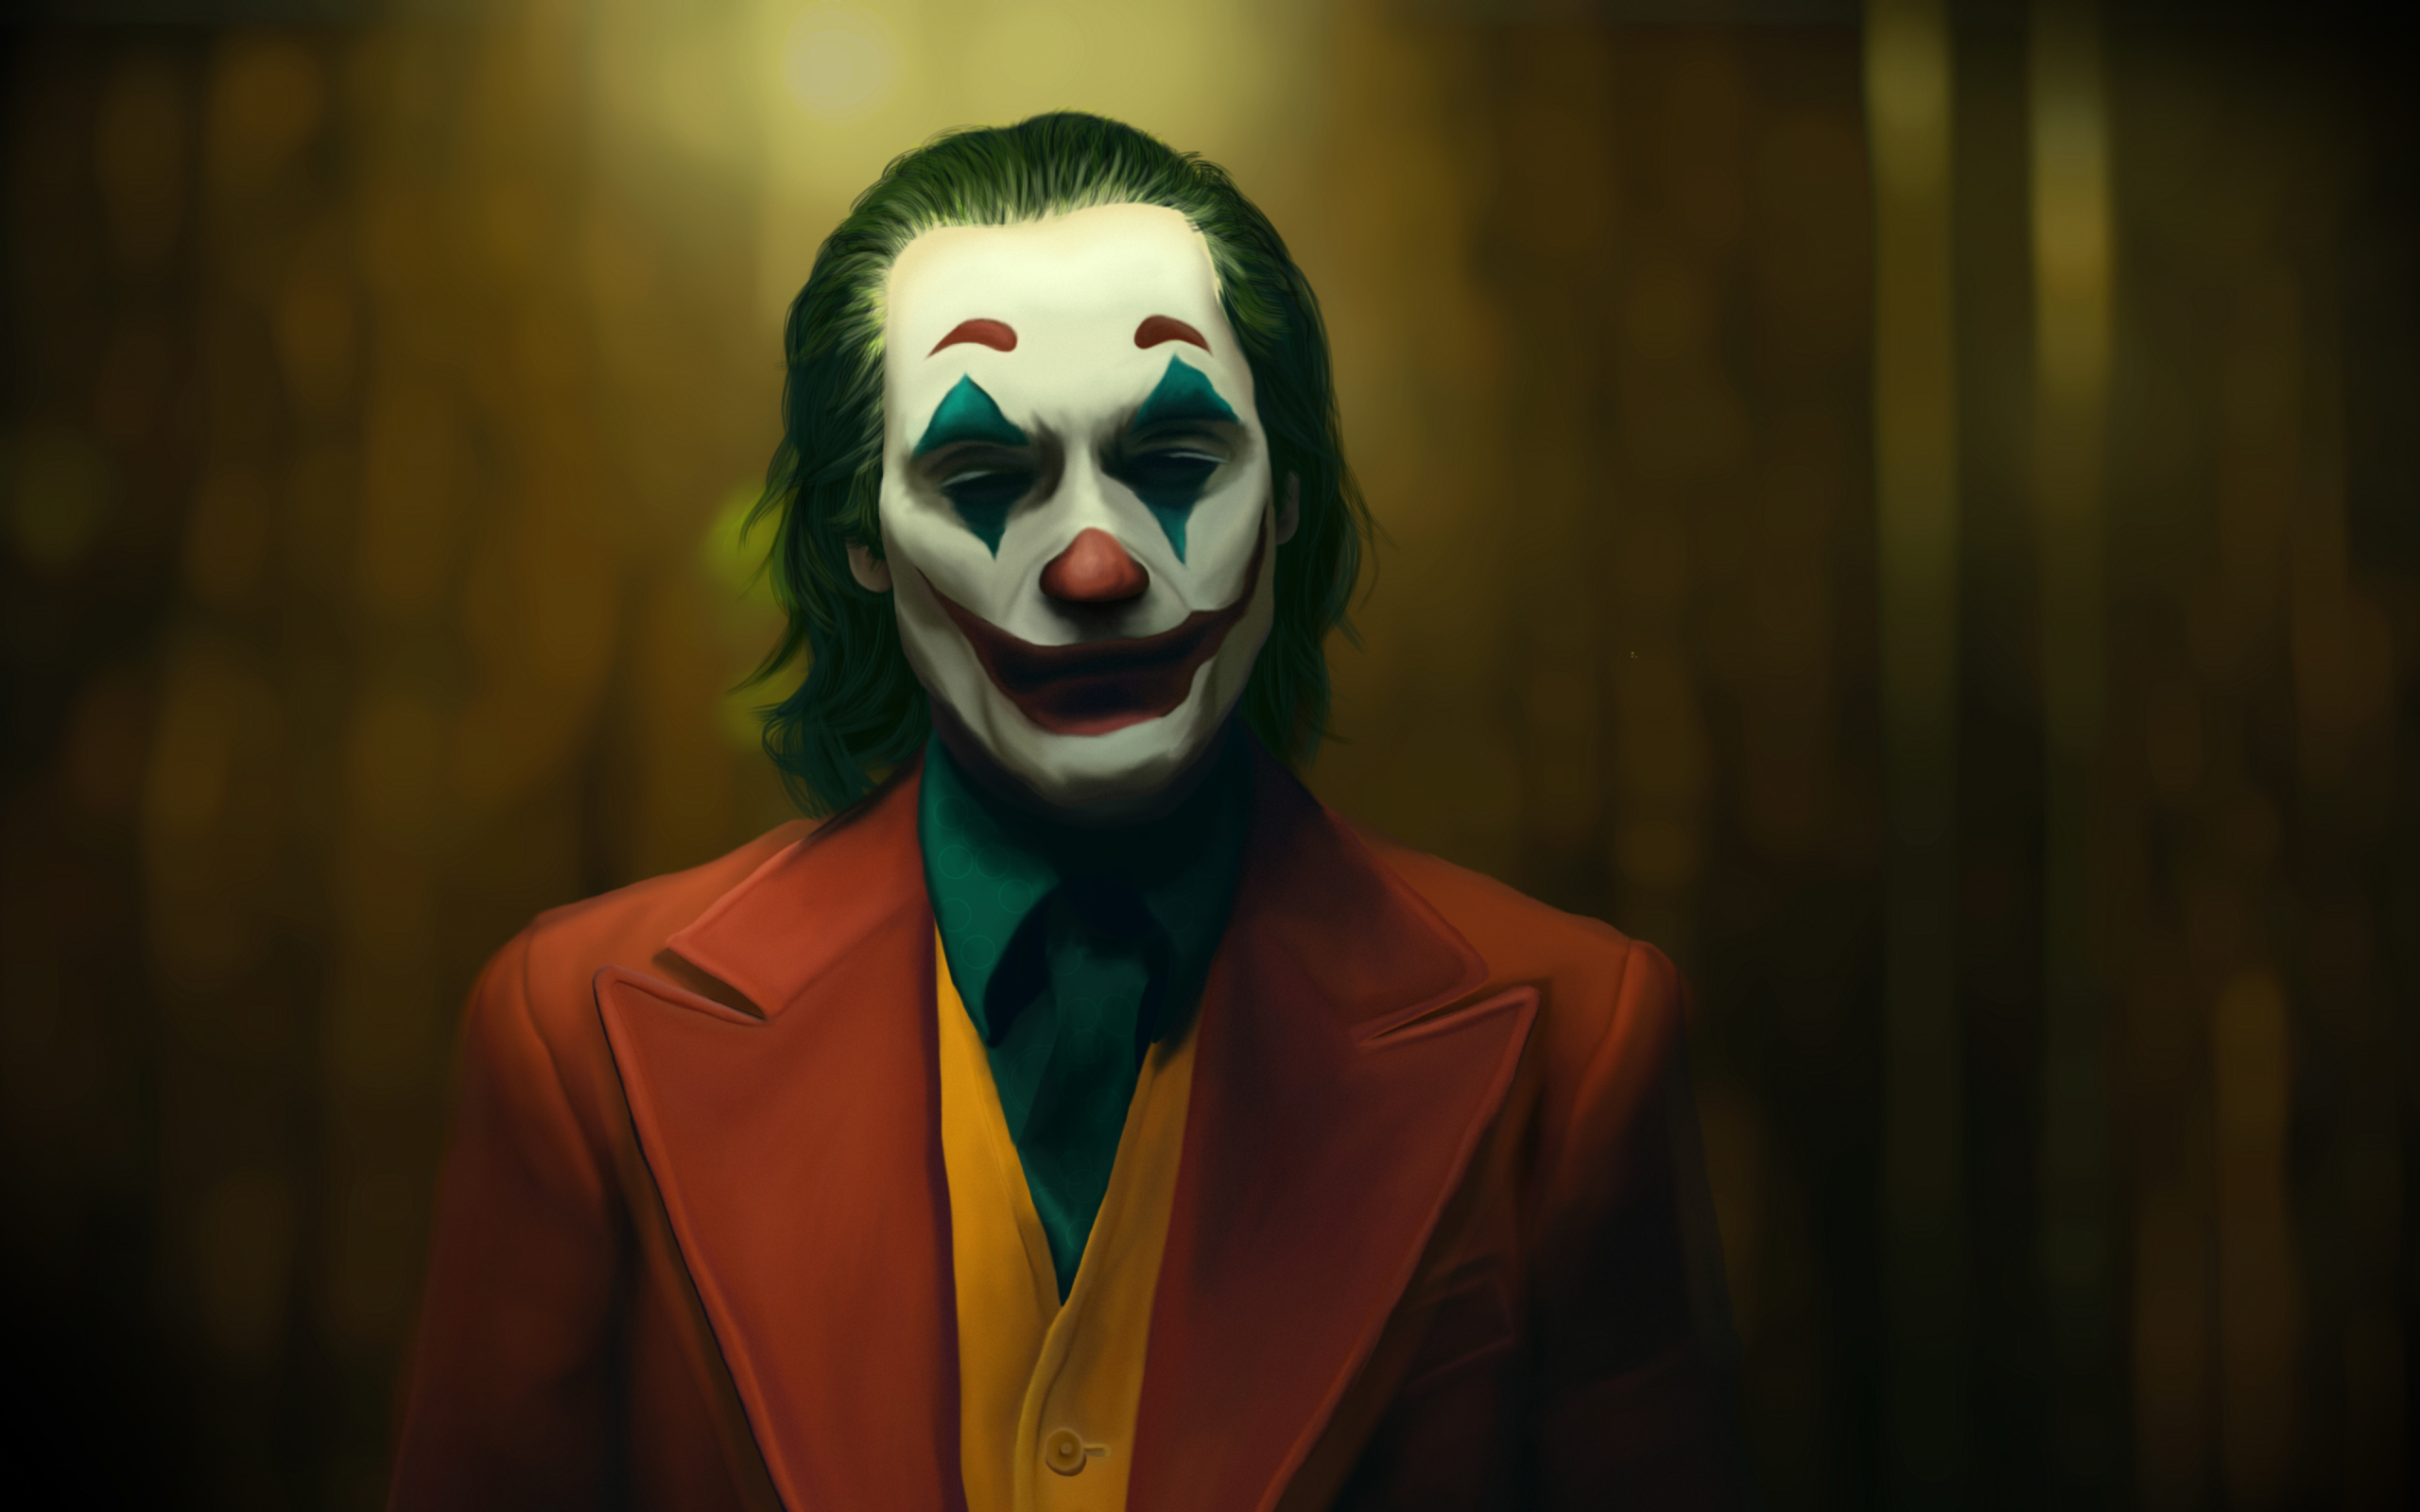 Wallpaper Of Movie Poster Joker Background HD Image